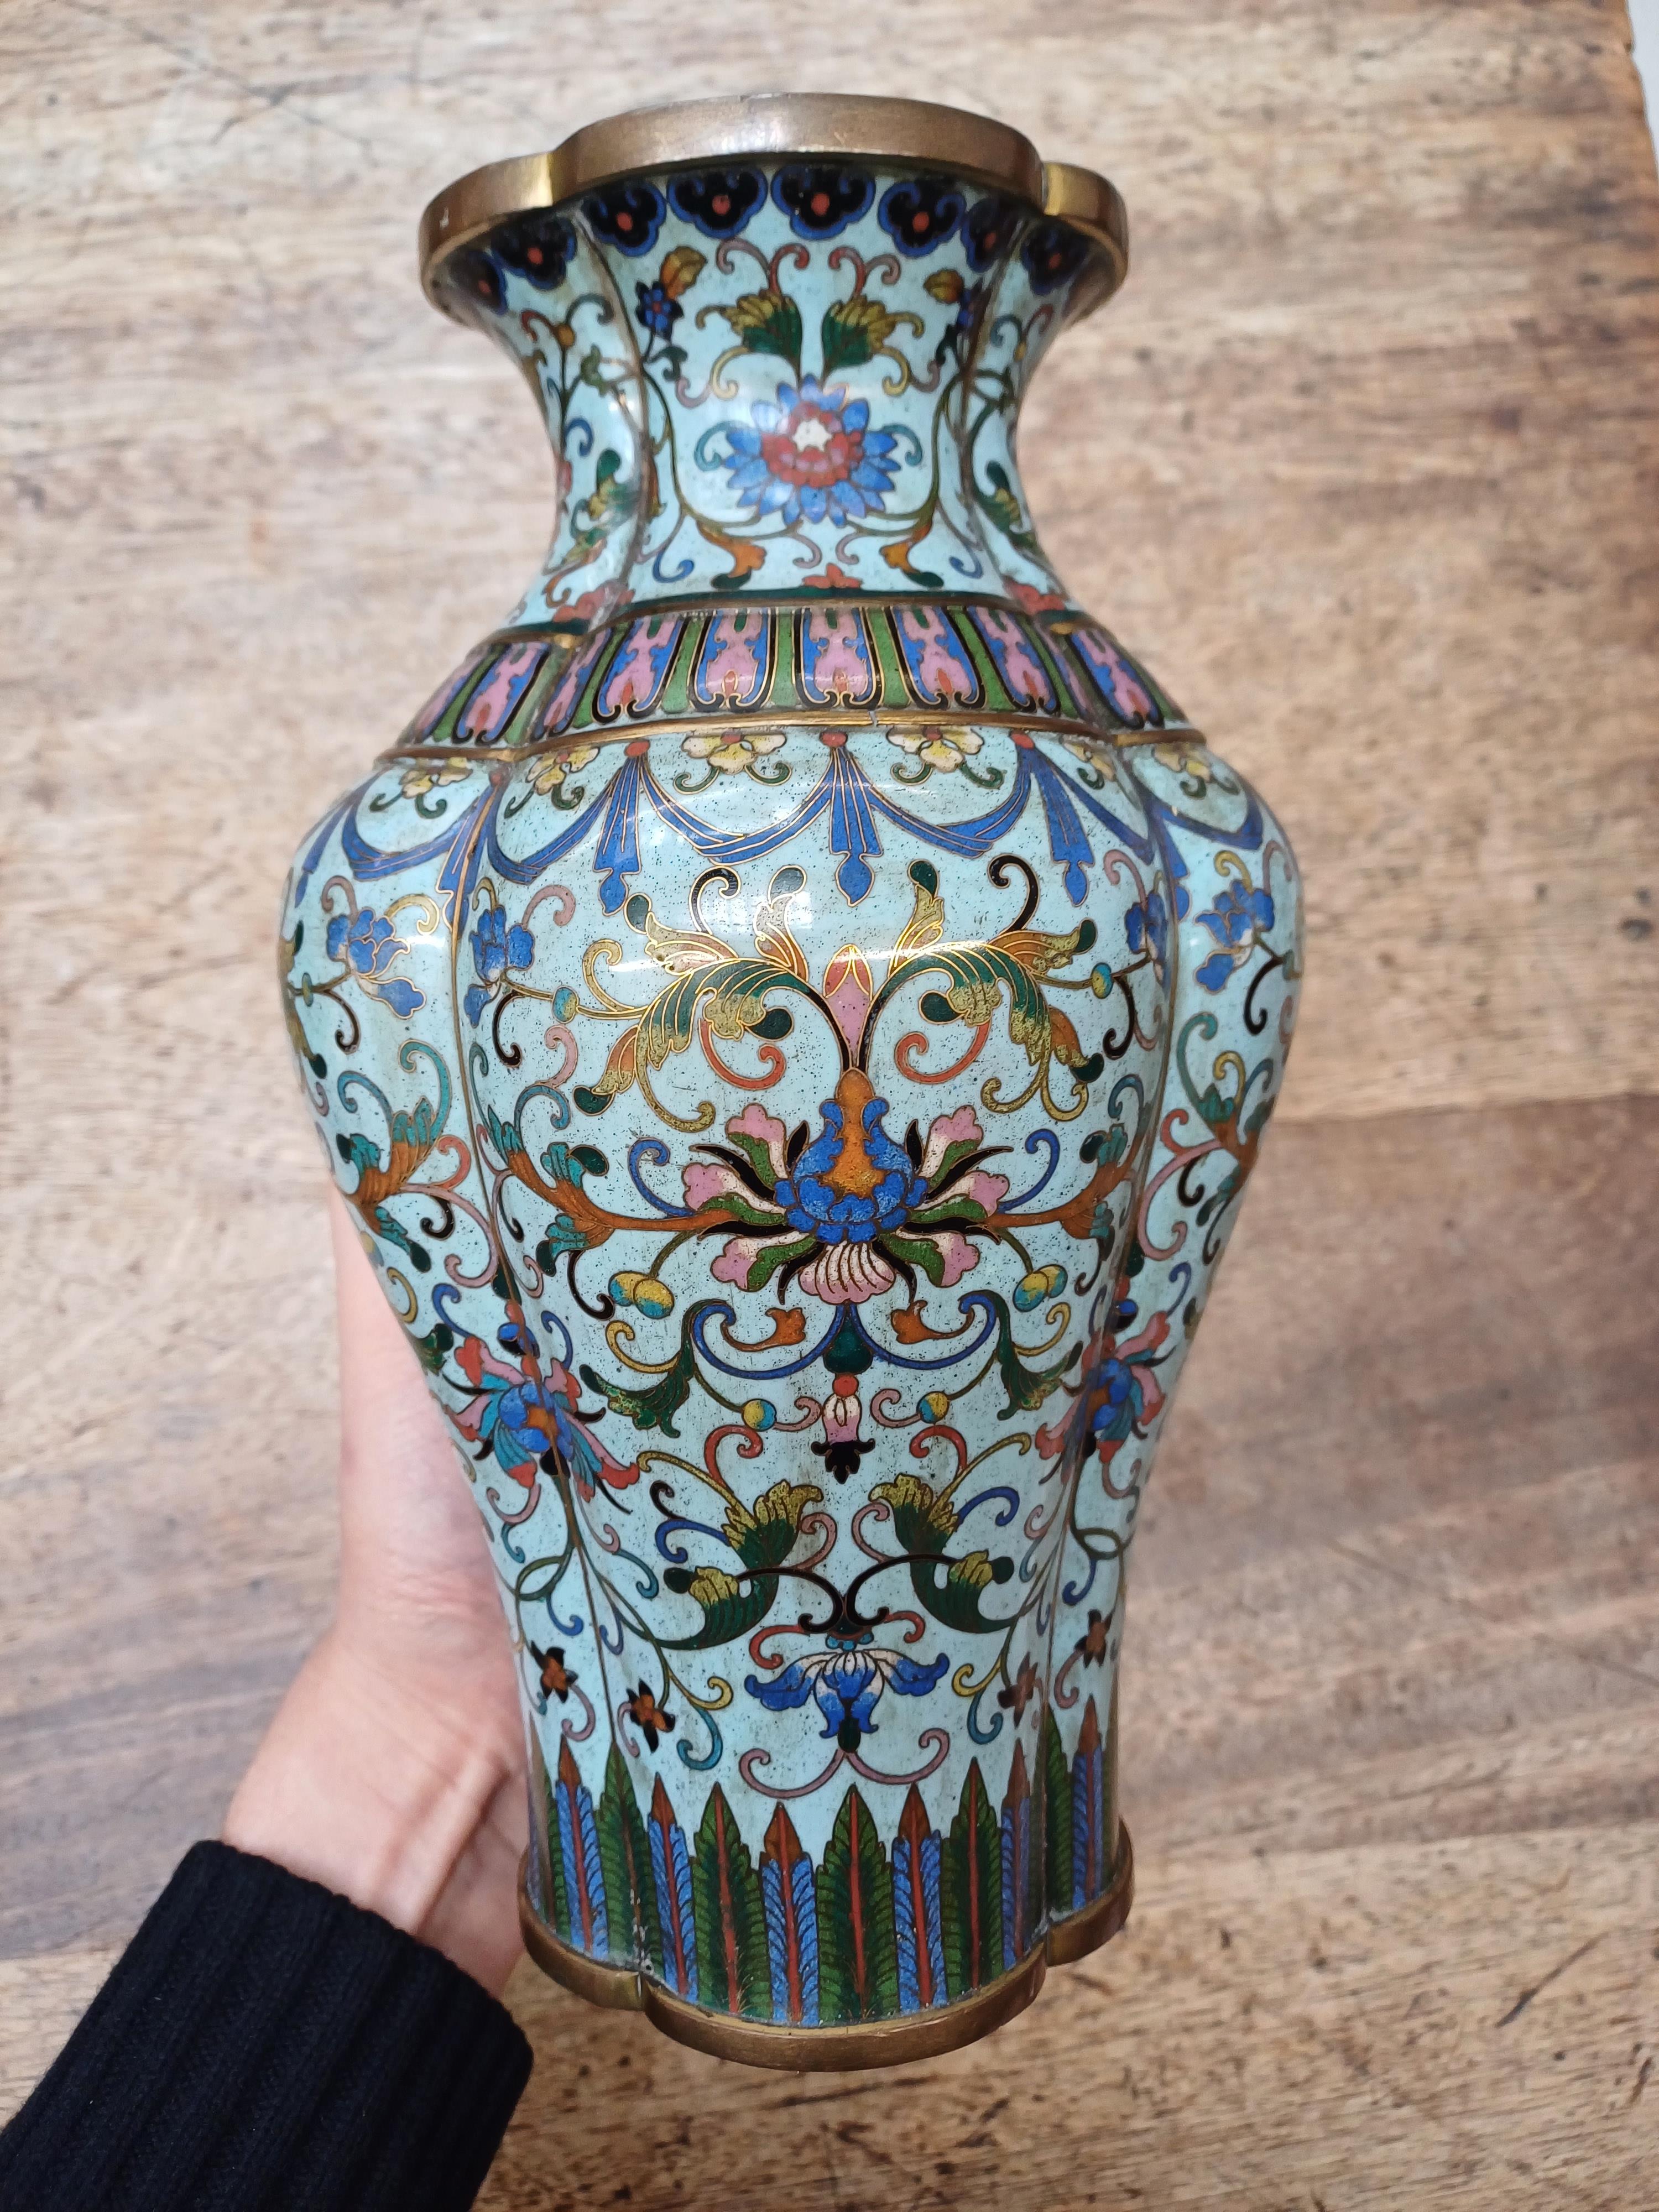 A PAIR OF CHINESE CLOISONNÉ ENAMEL VASES 清十八世紀 銅胎掐絲琺瑯番蓮紋瓶一對 - Image 14 of 17